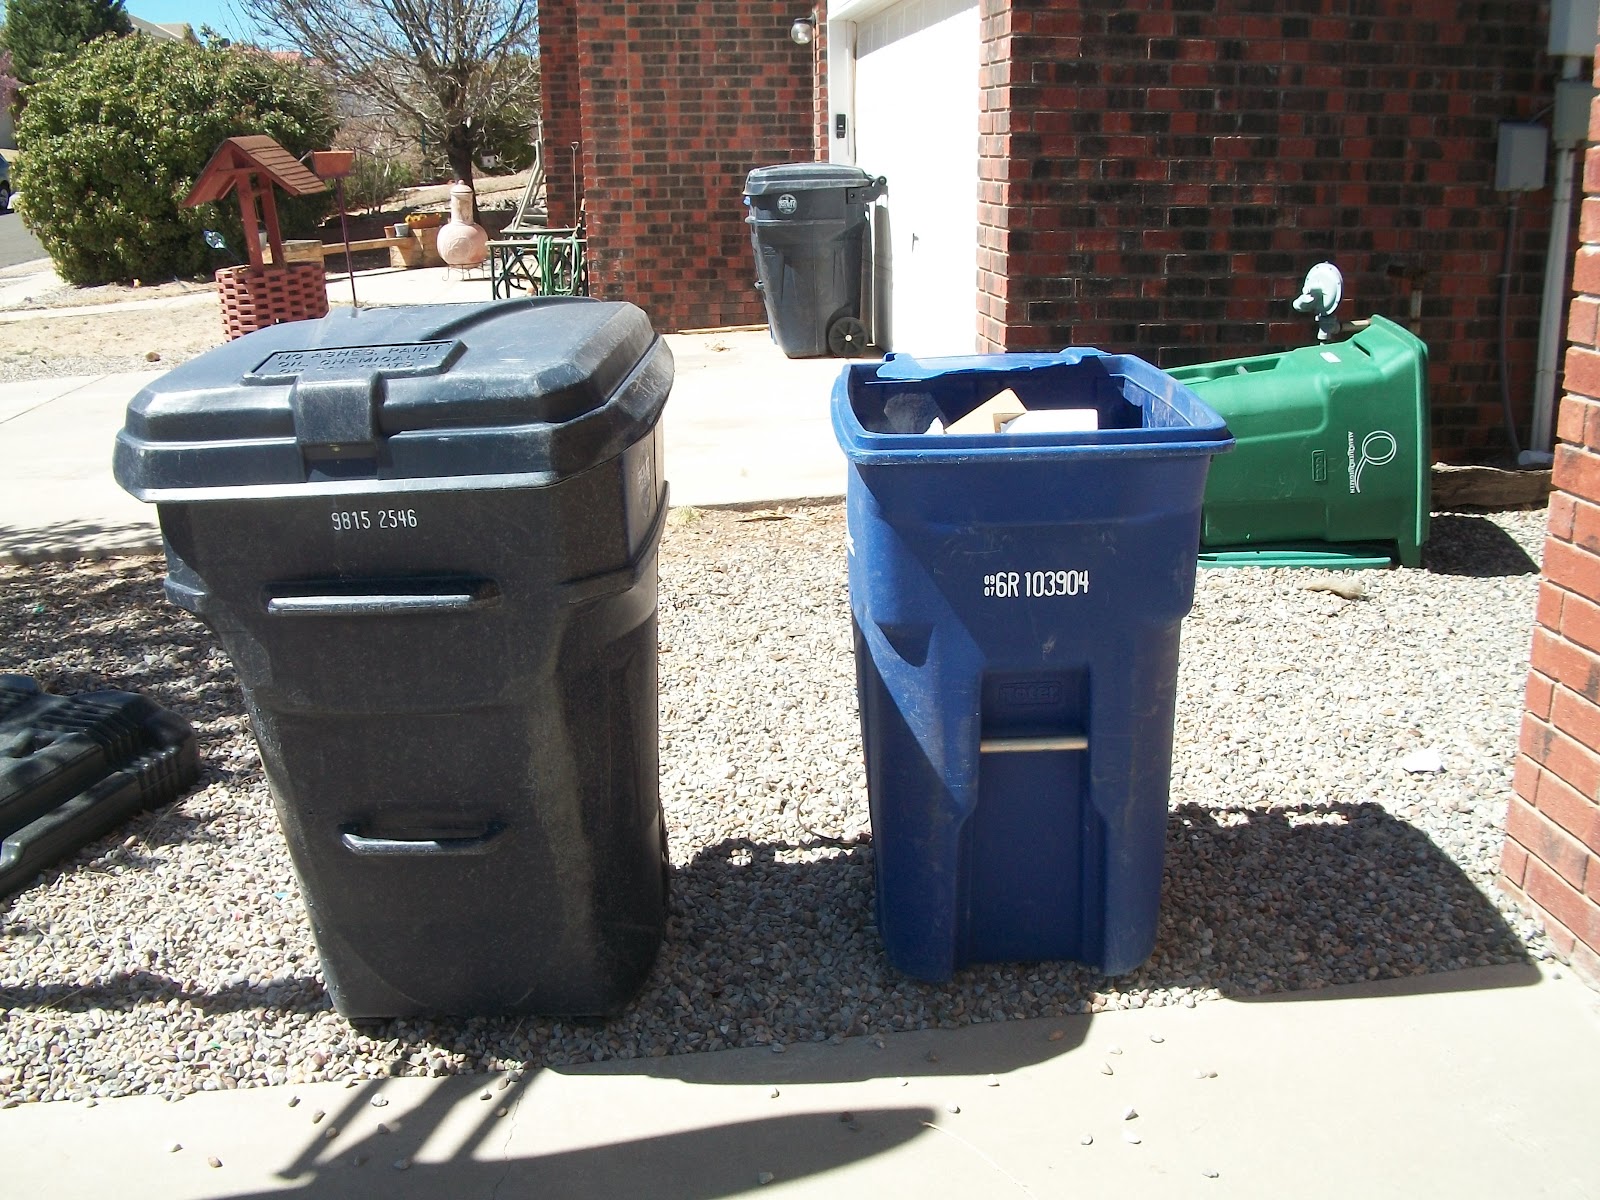 Rubbermaid Kitchen Recycling Bin Review: Hidden Recycler